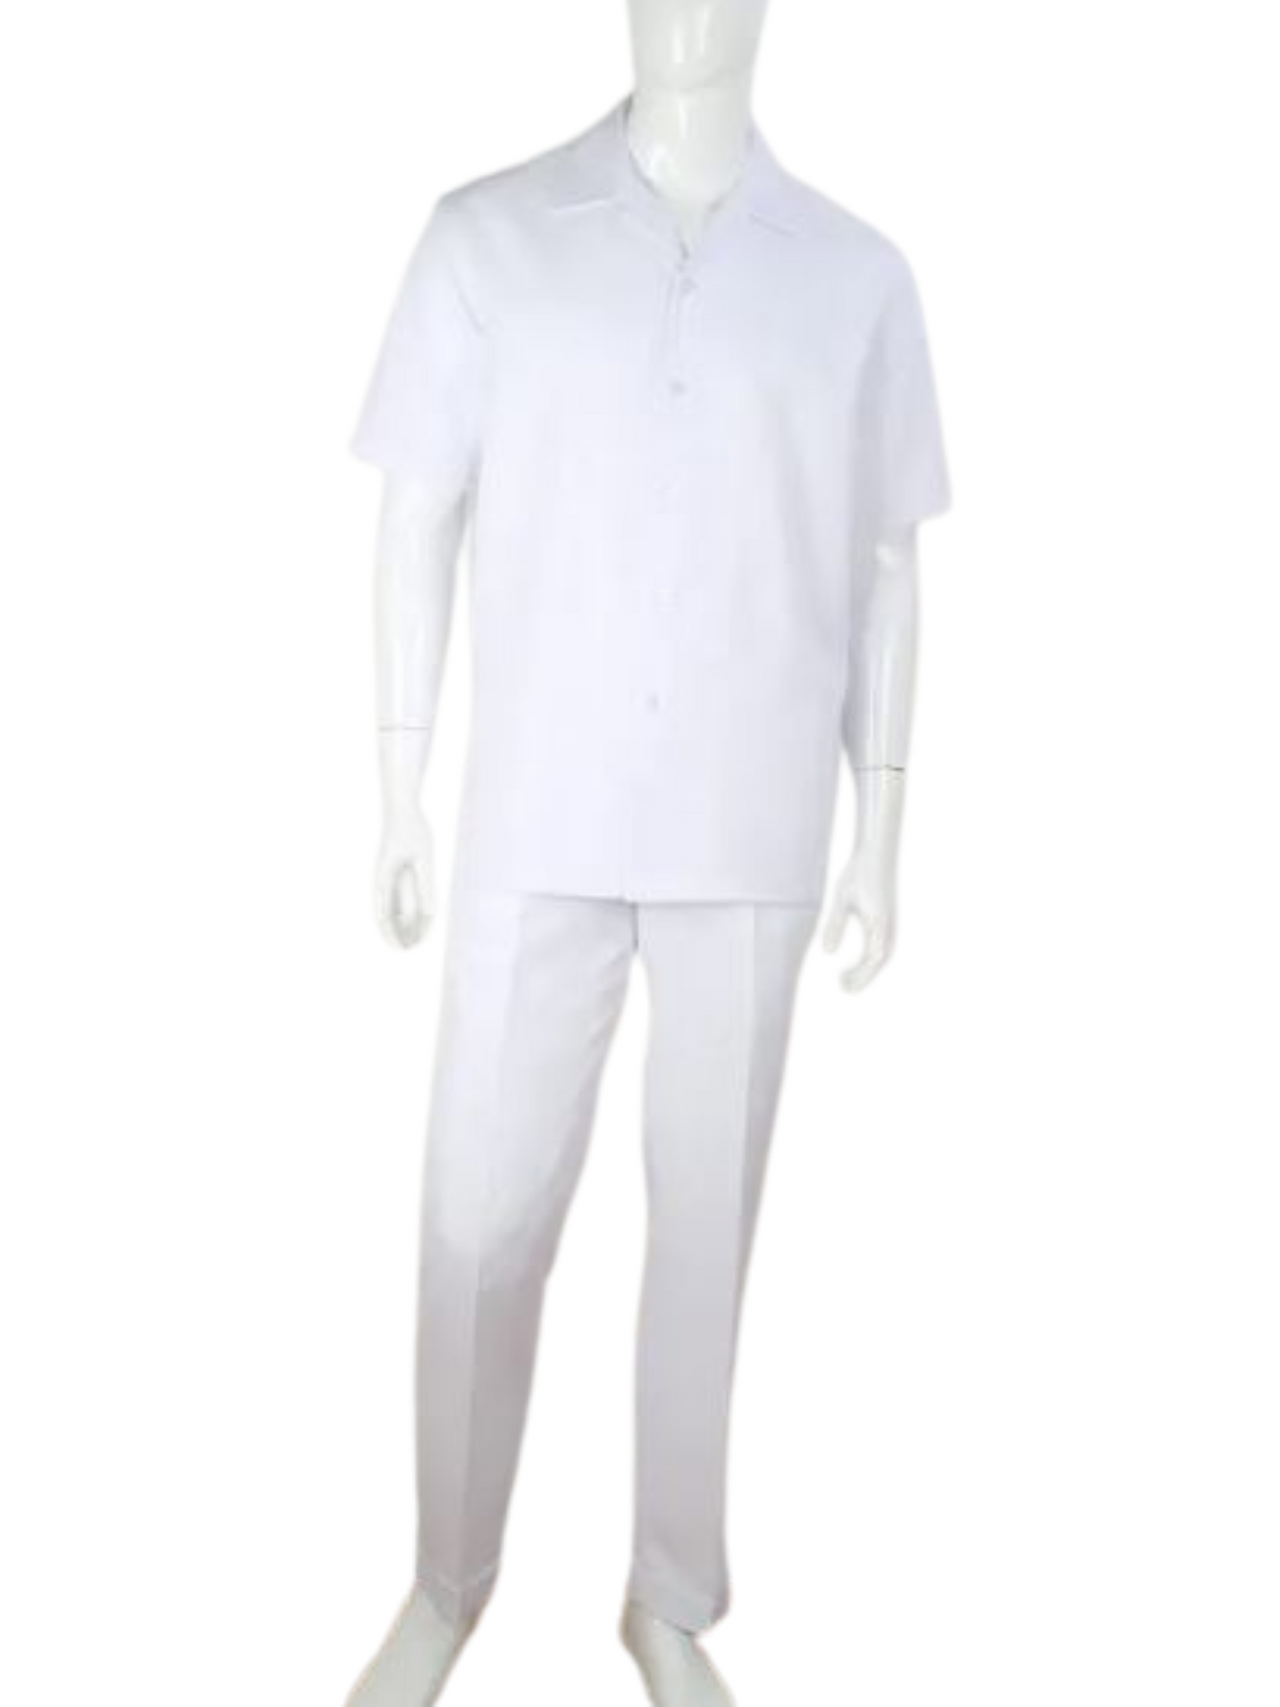 Apollo King Royal Diamond White Classic Fit 2 Piece Walking Suit